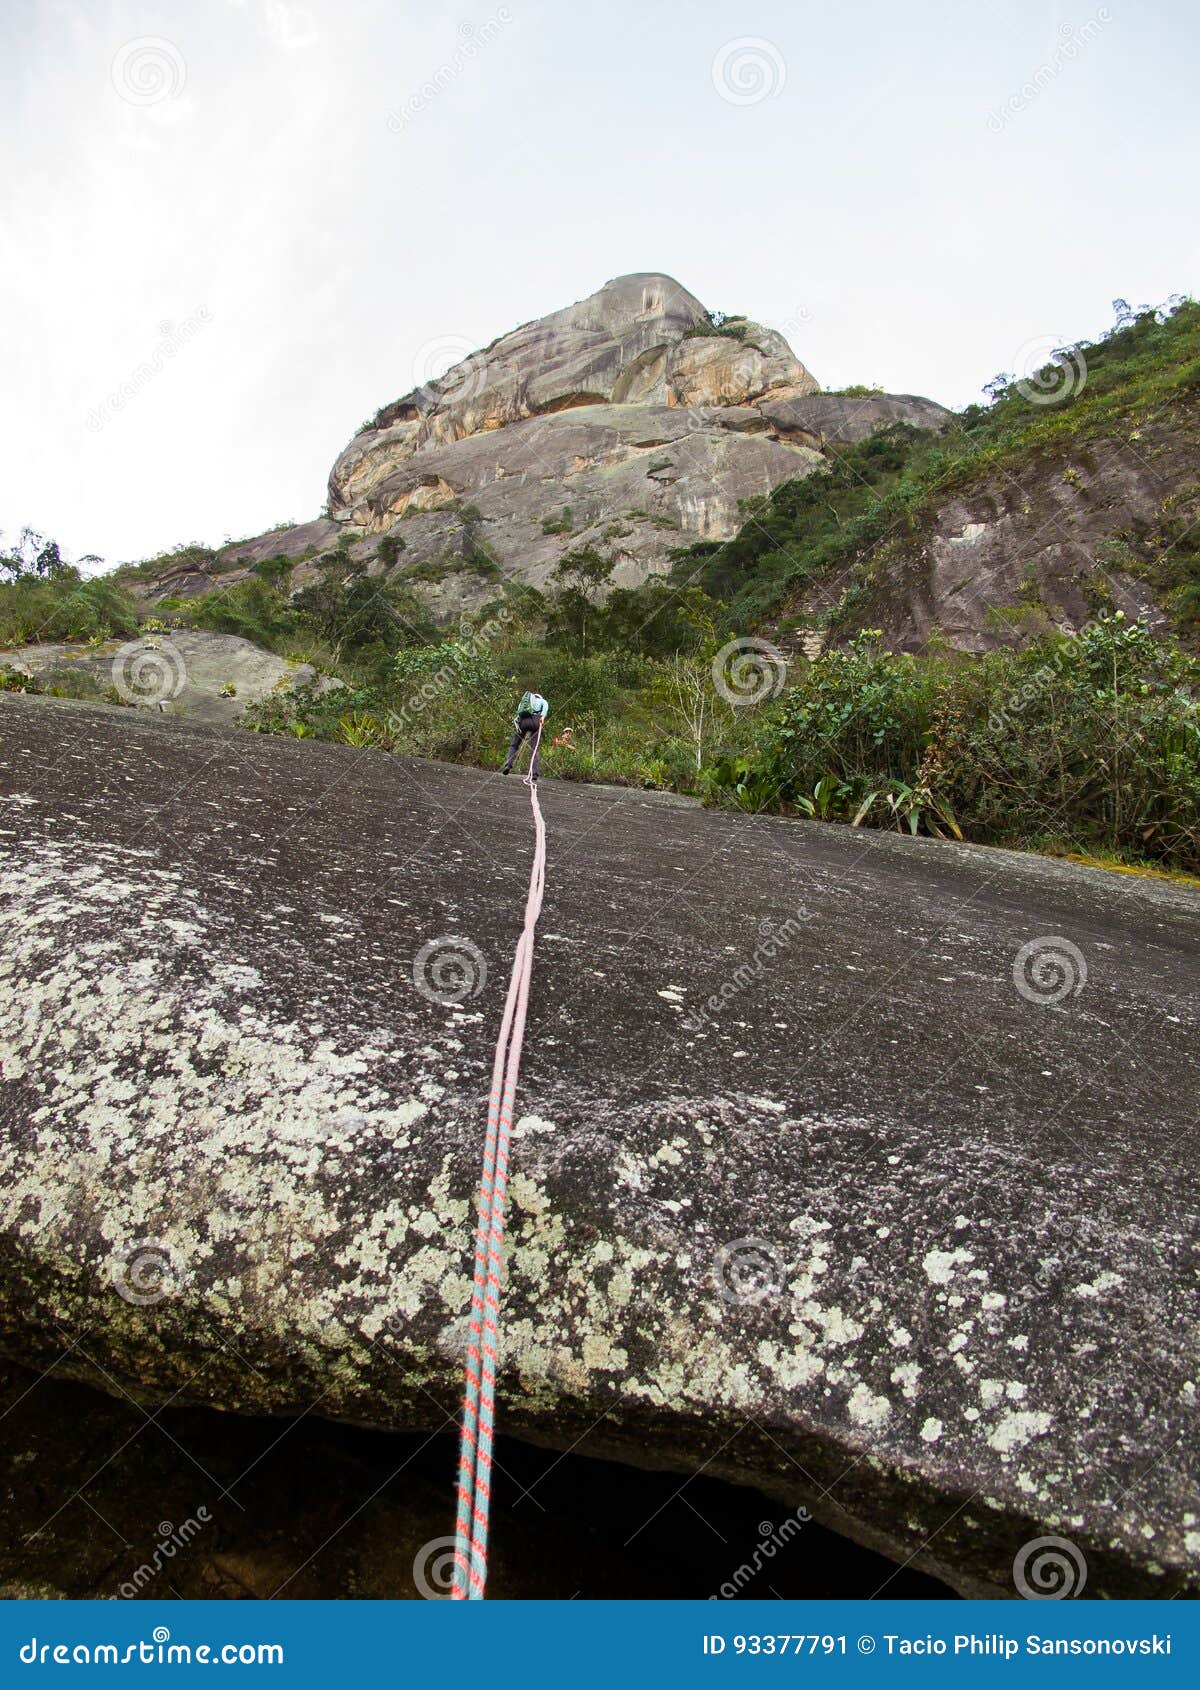 abseiling from dedo de deus mountain in brazil